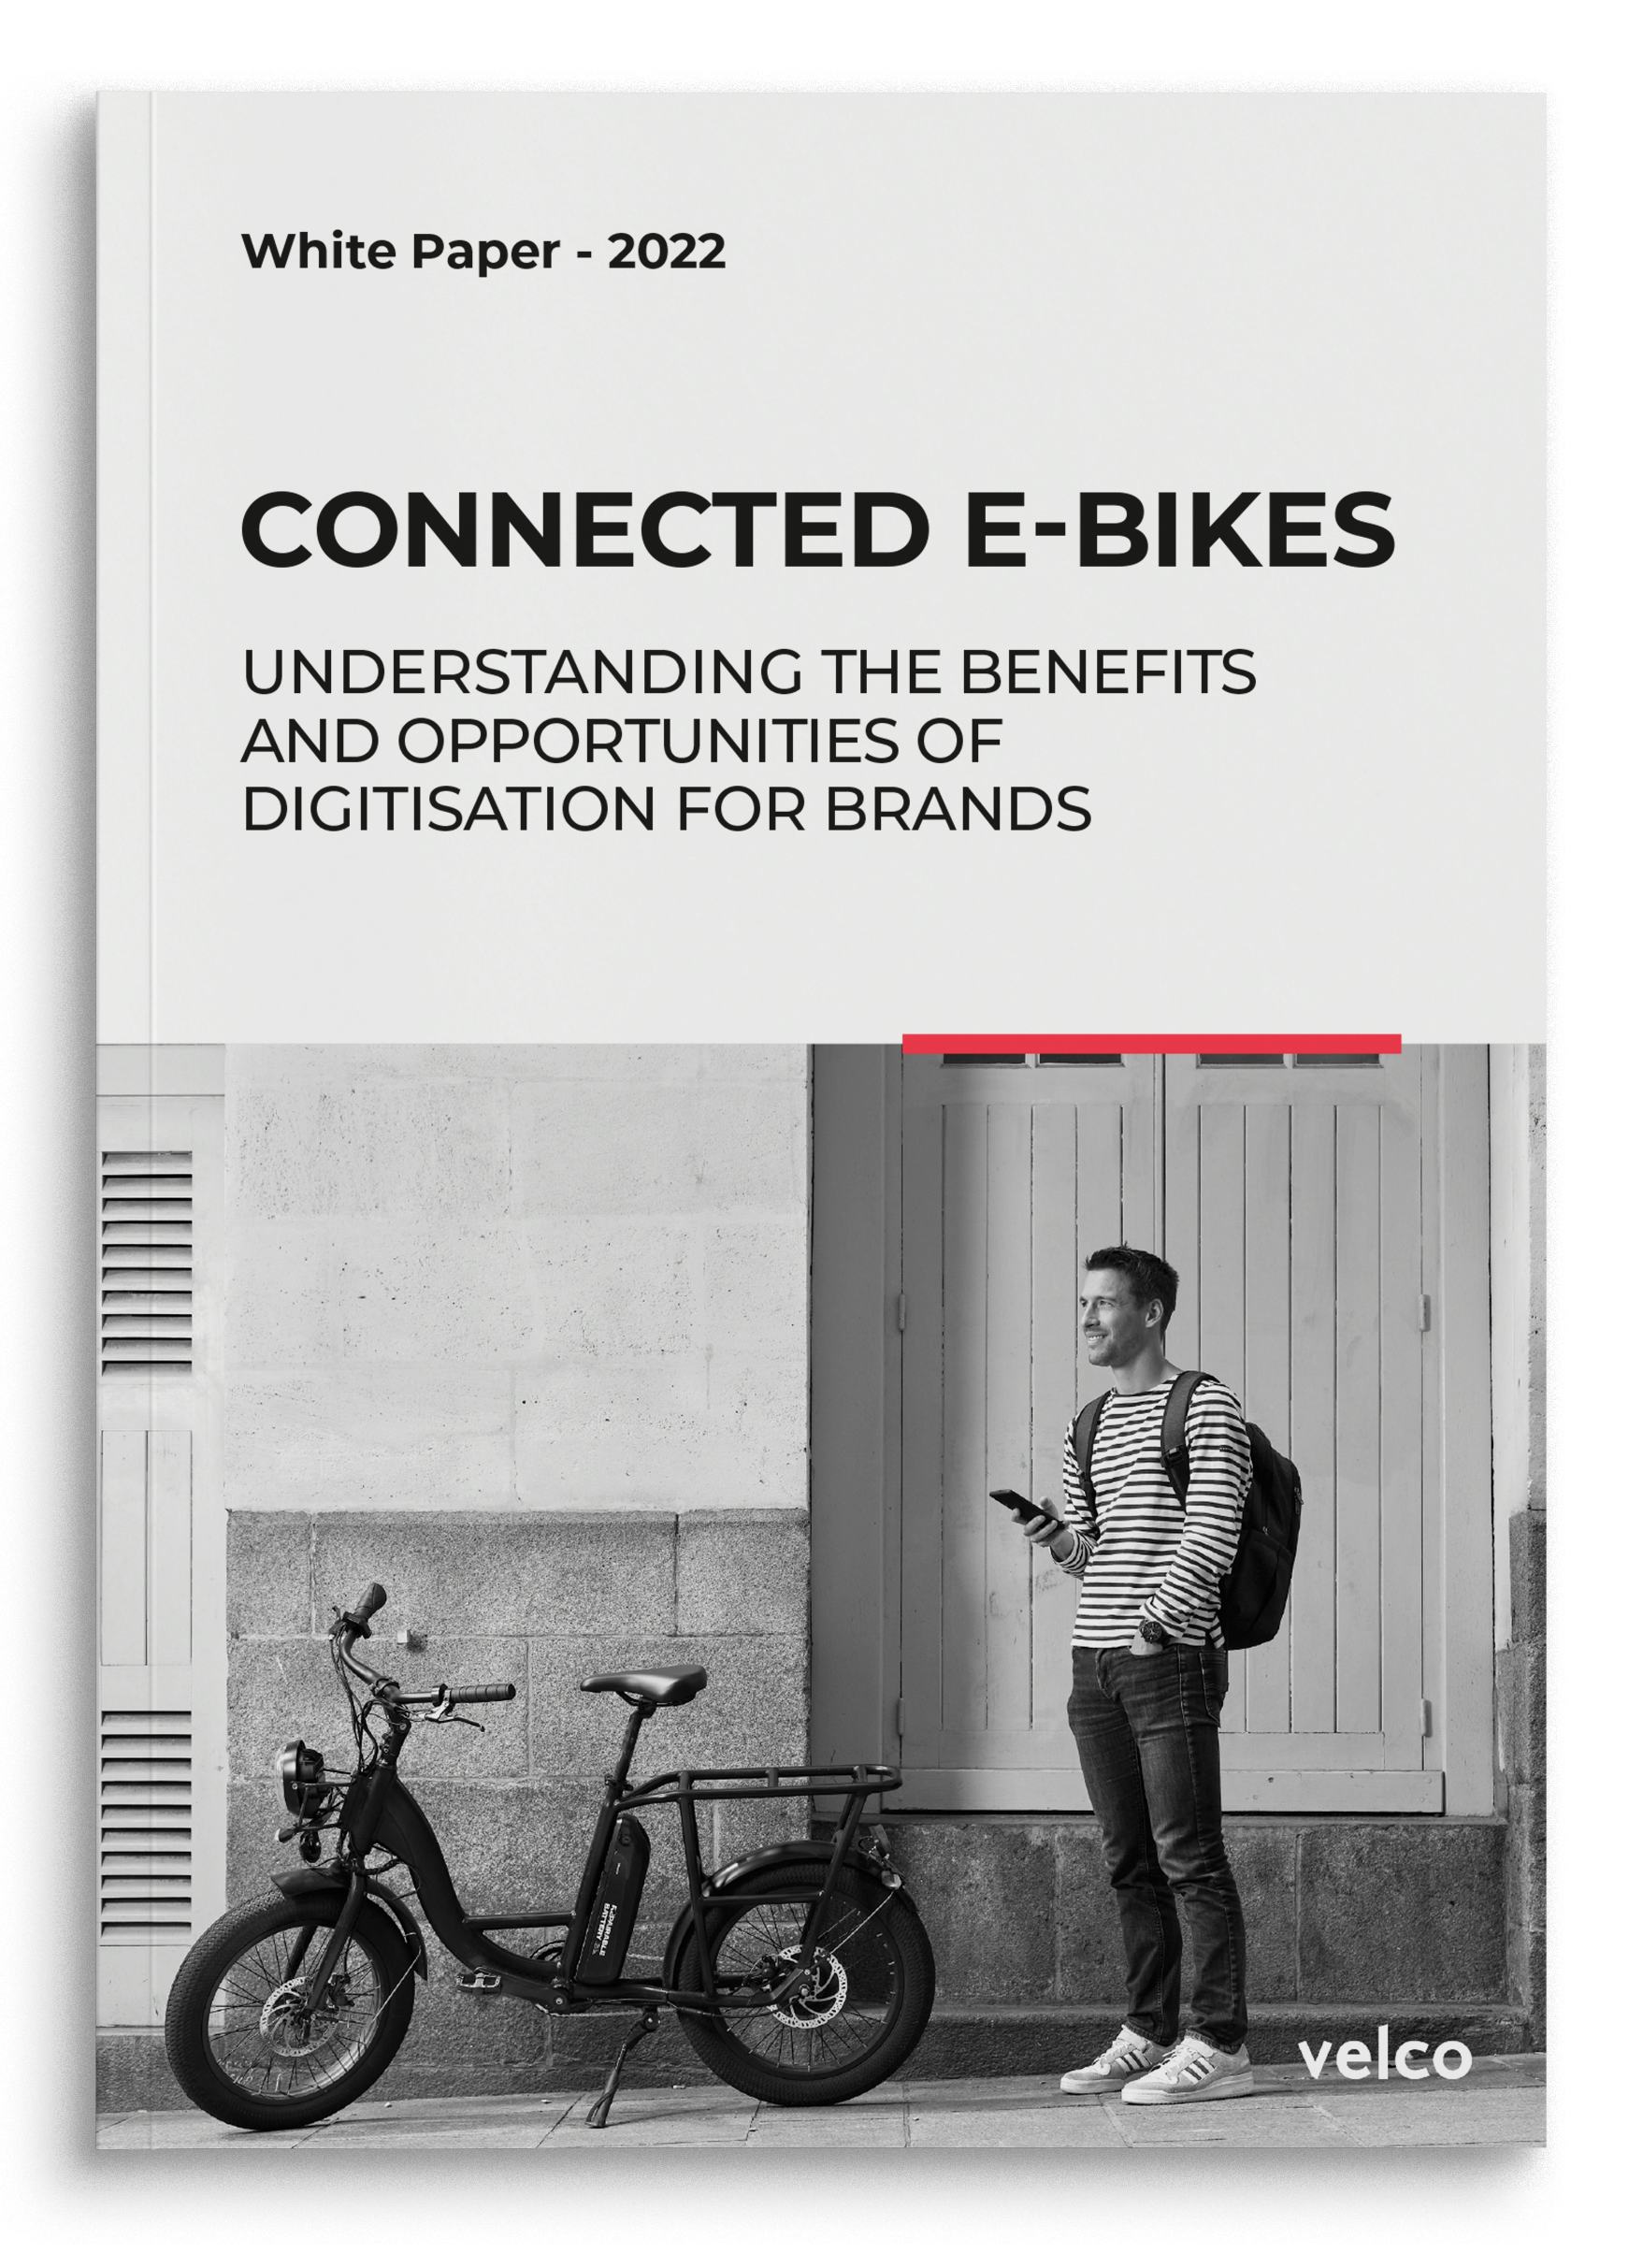 White paper 'Connected e-bikes'